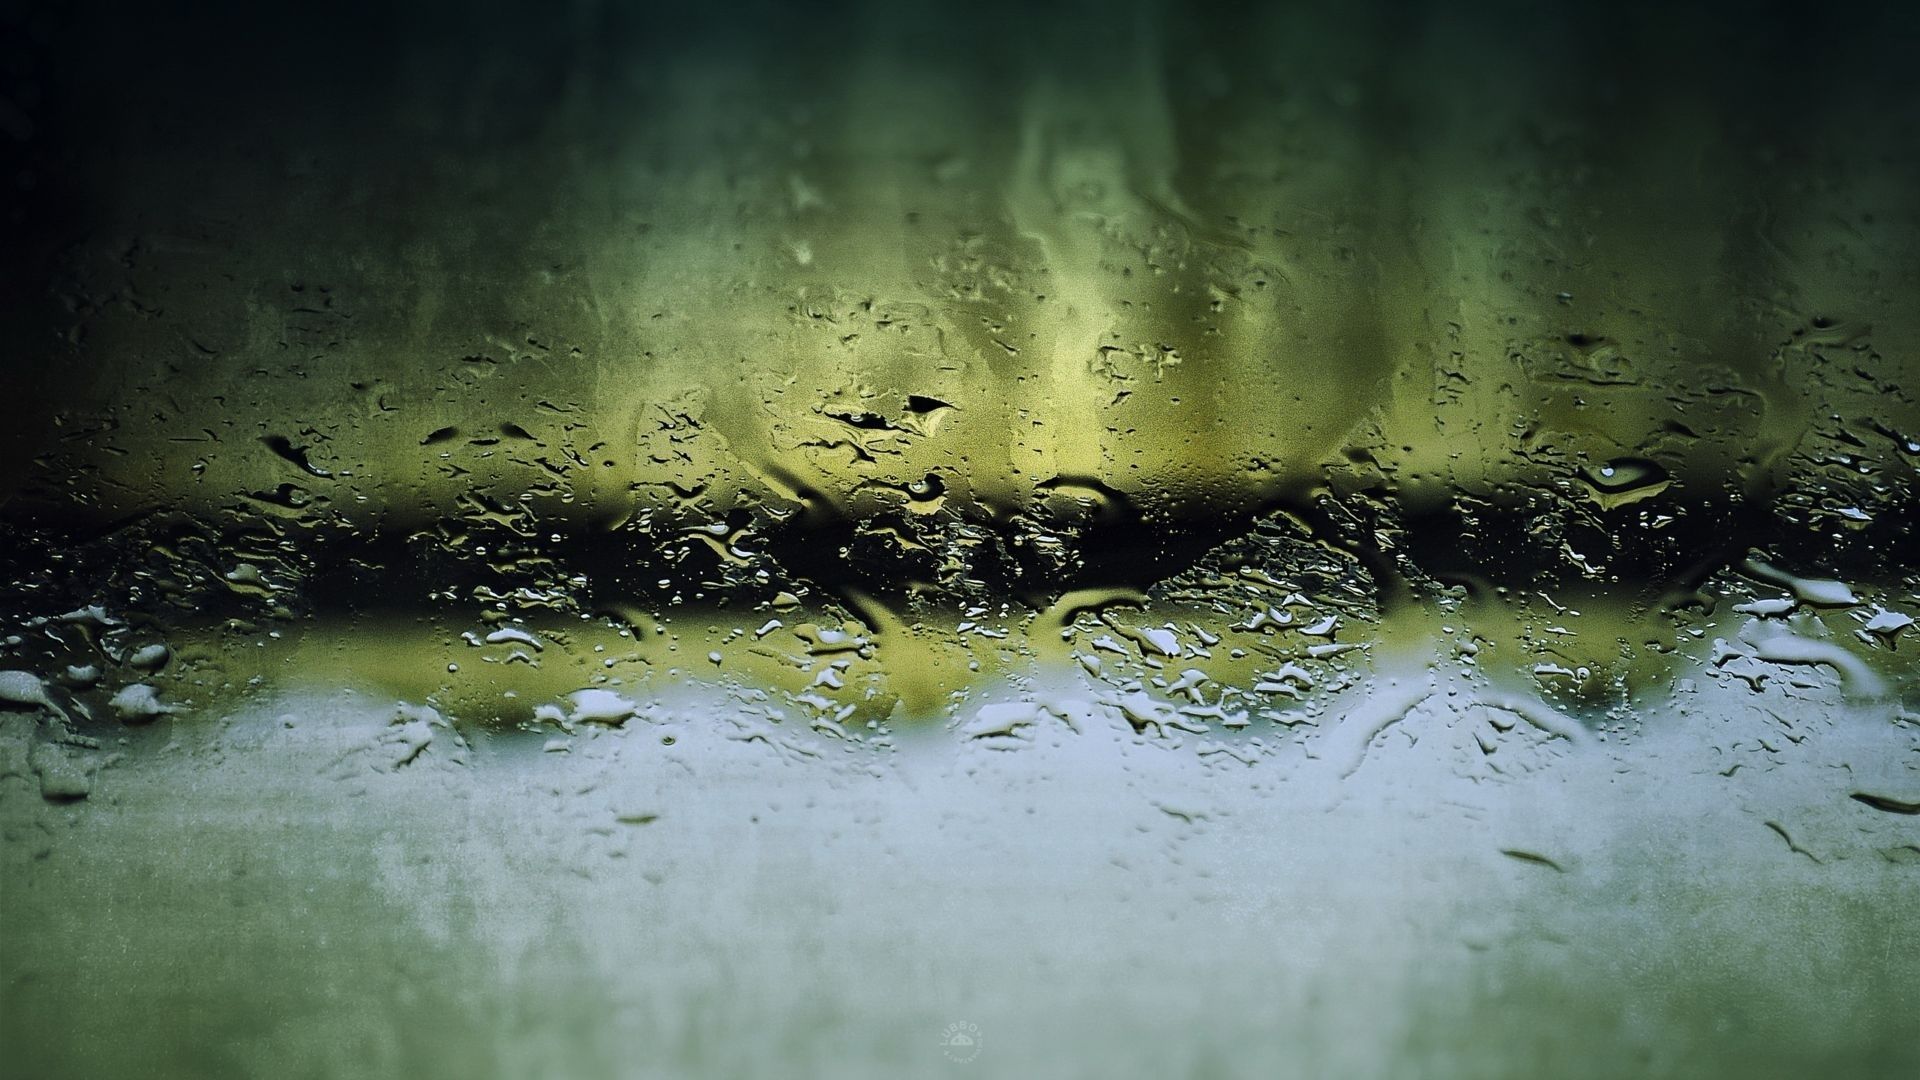 Top Rain Glass Wallpaper Images for Pinterest